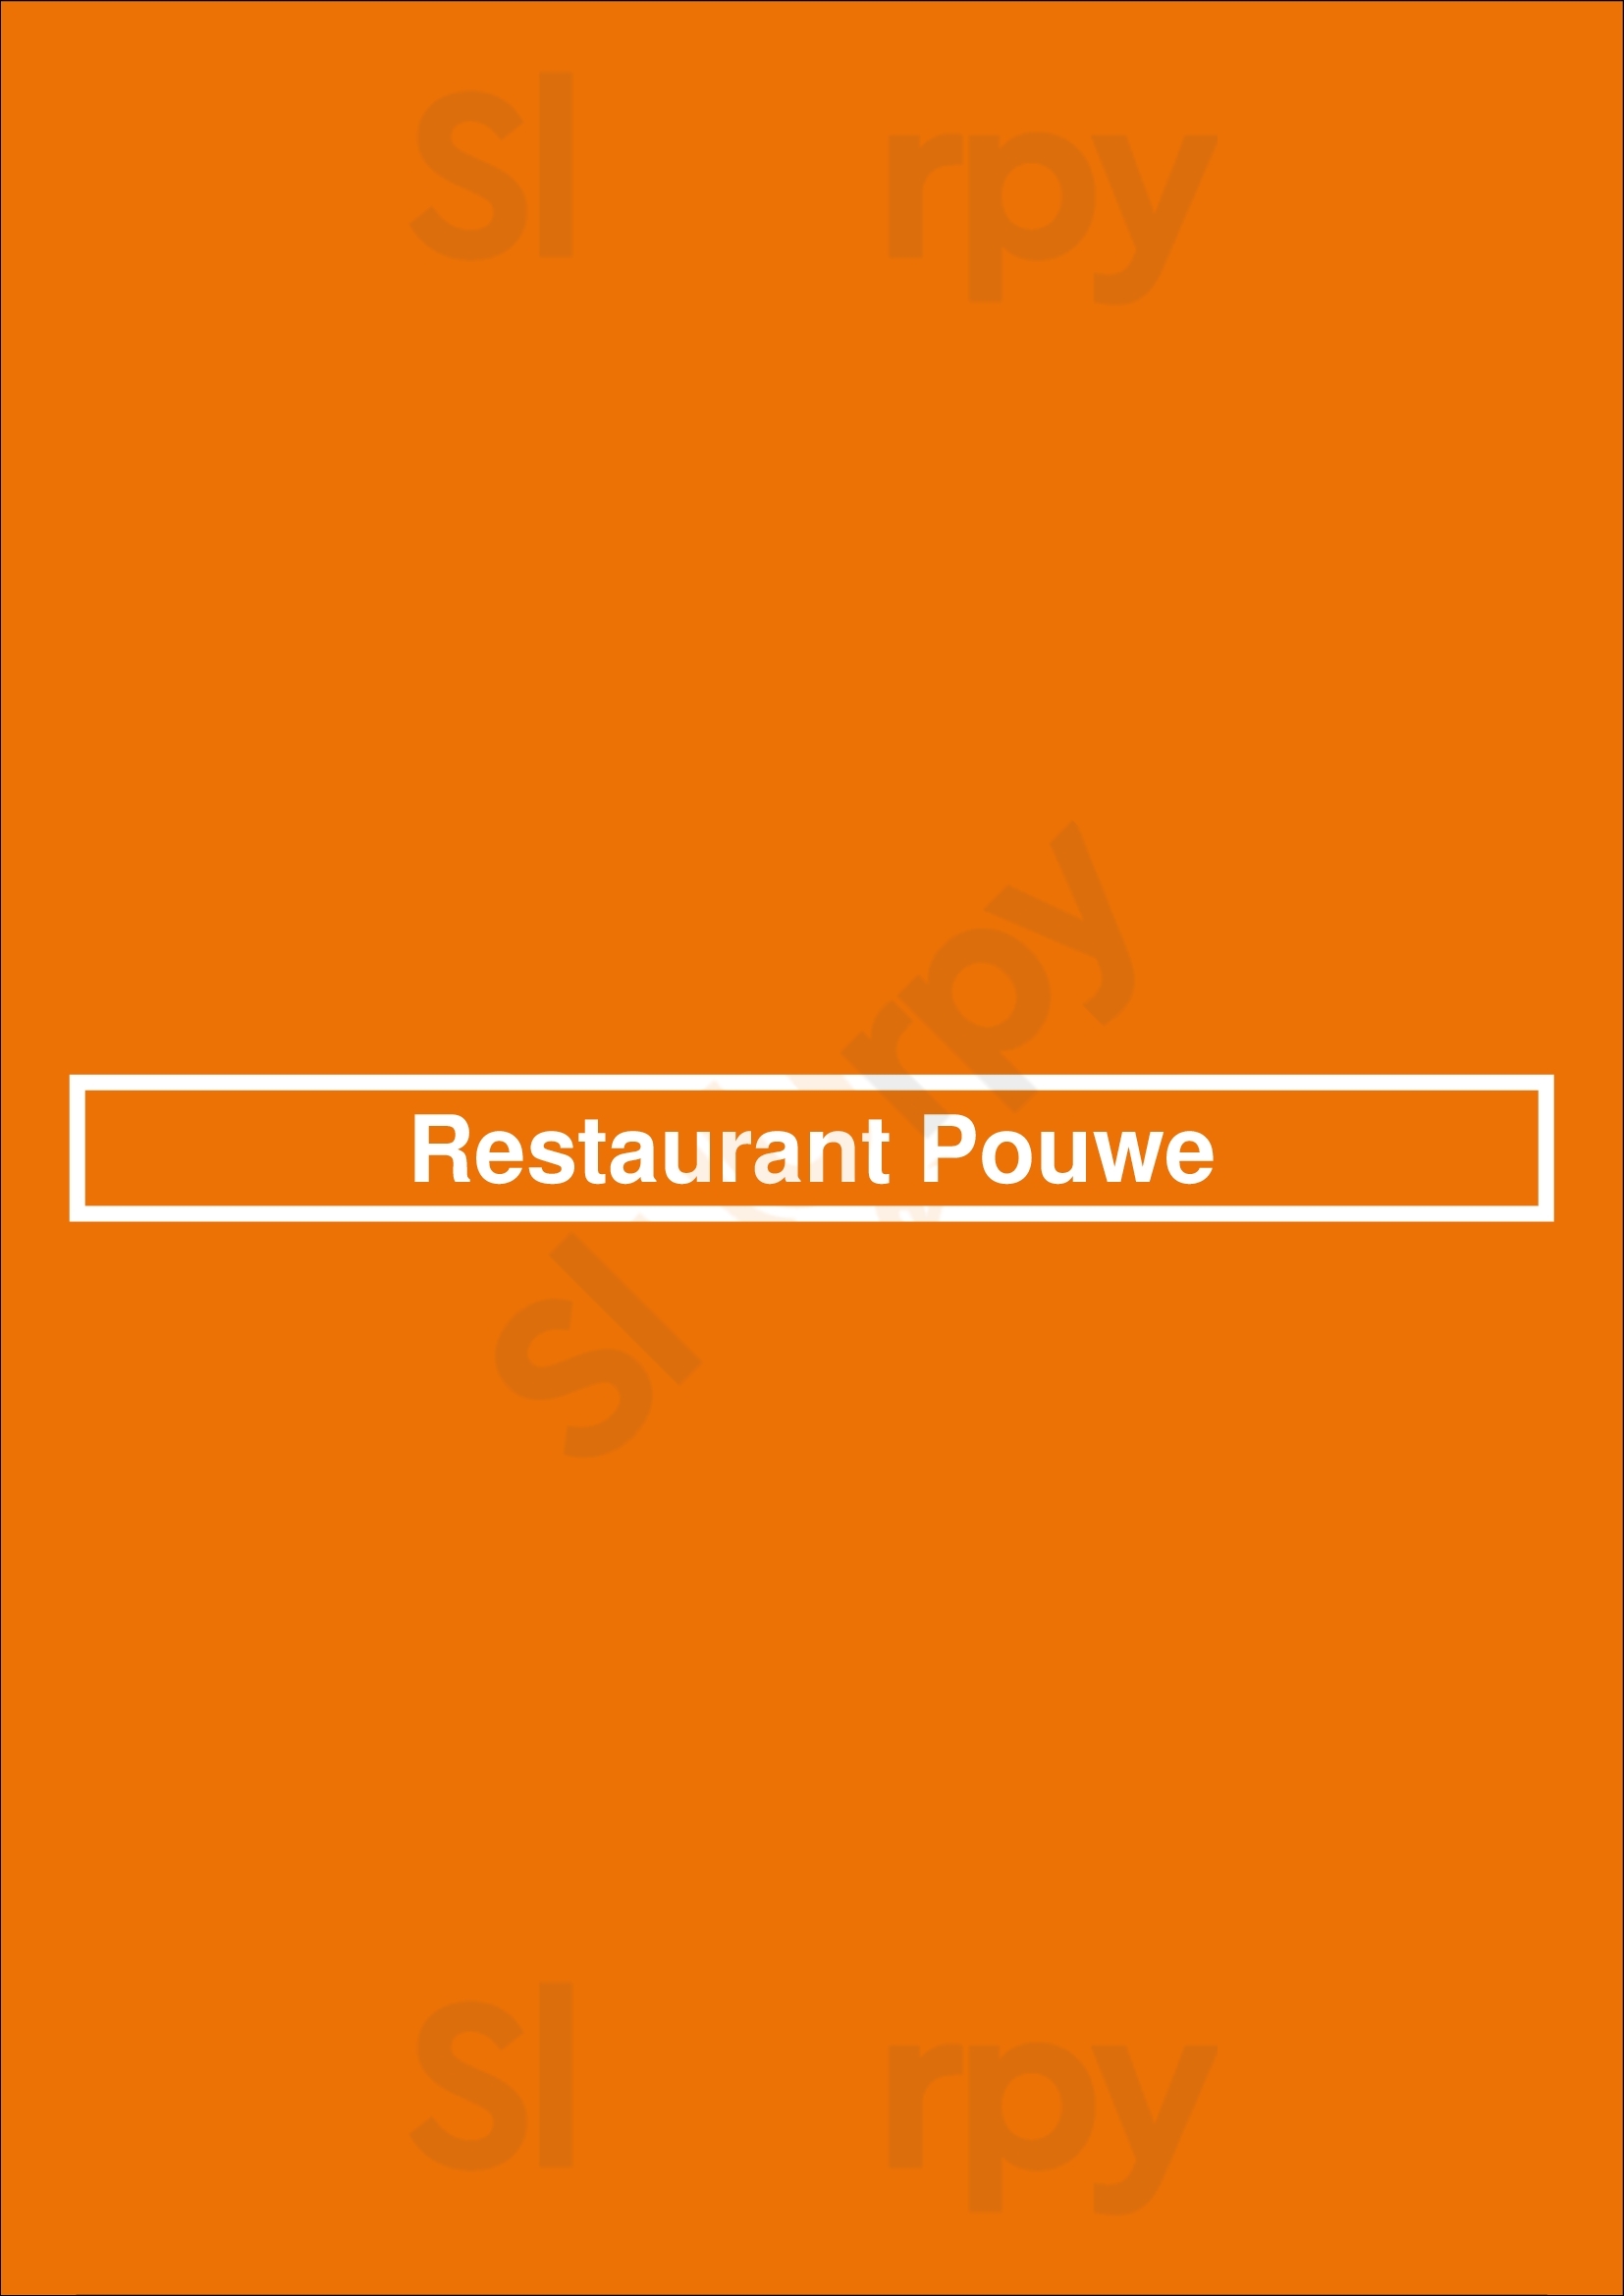 Restaurant Pouwe Hoeven Menu - 1